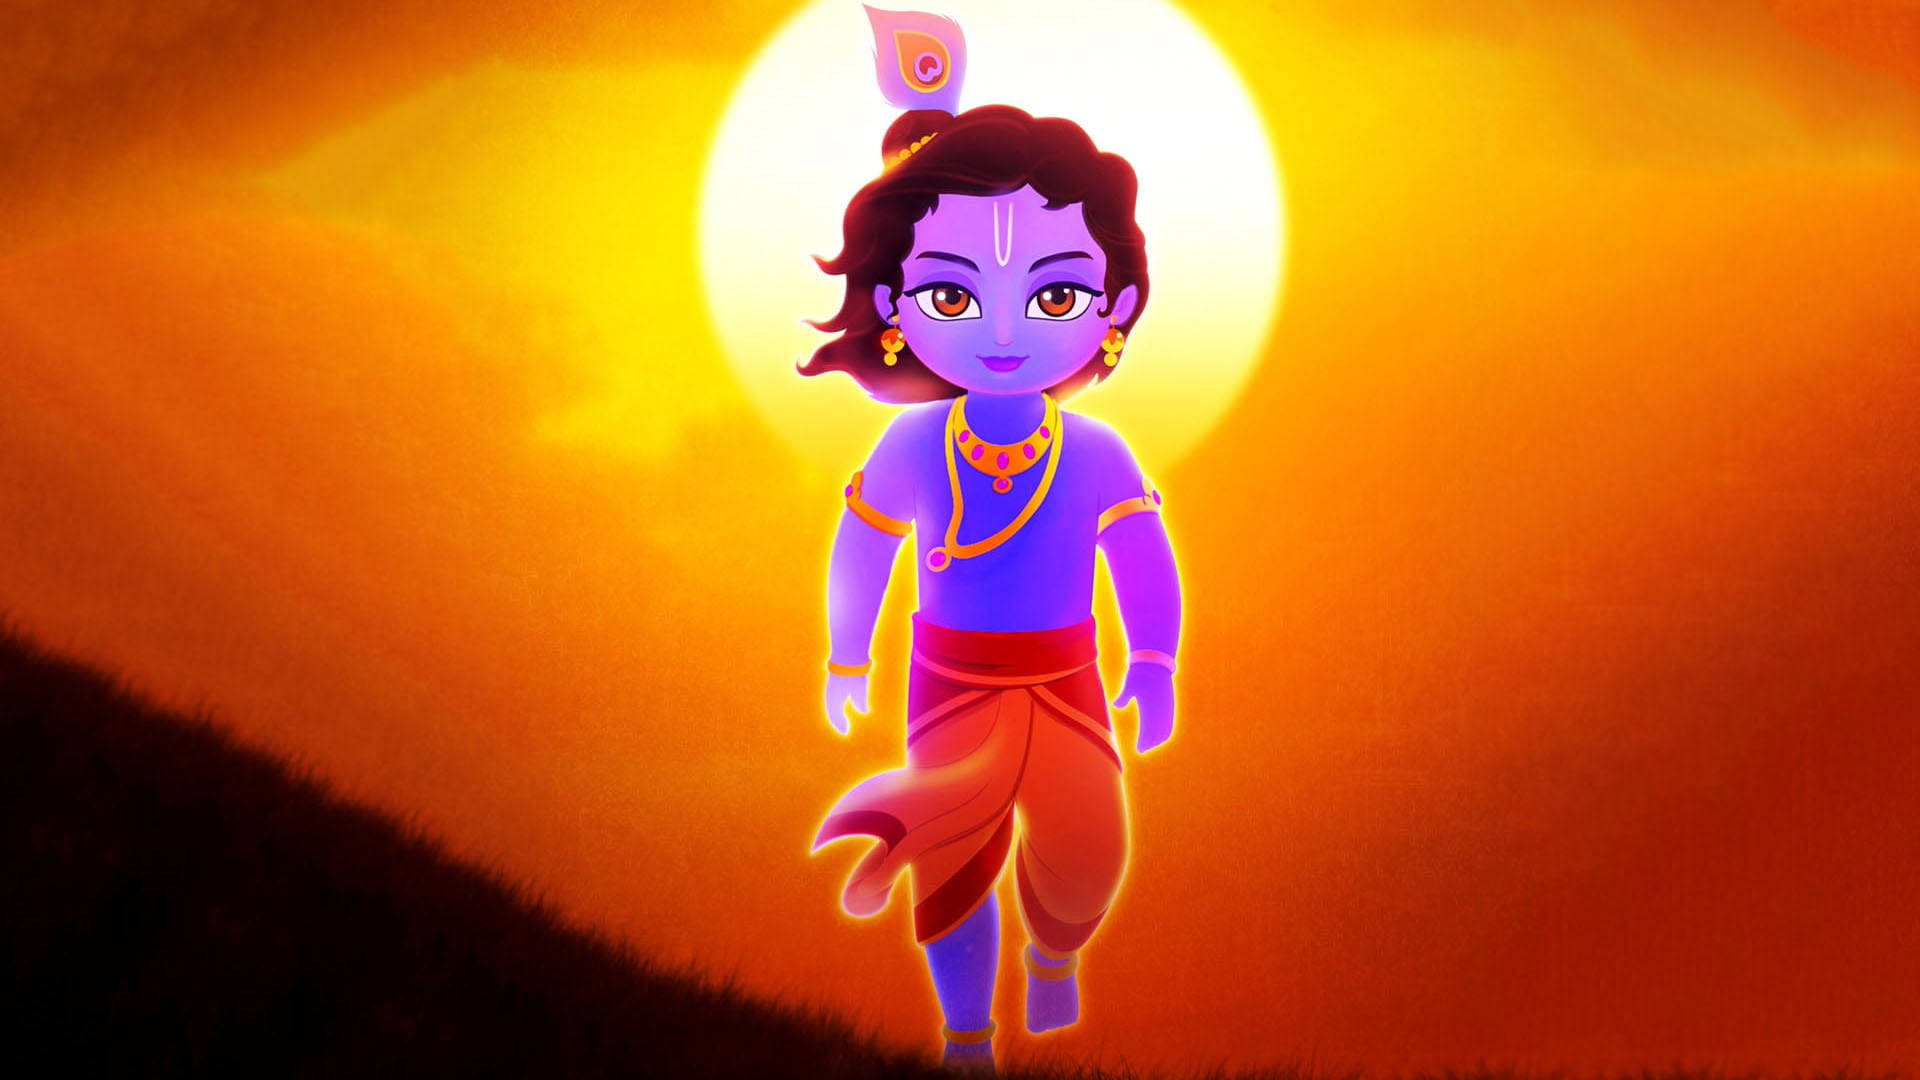 Young Shri Krishna Against Sunset